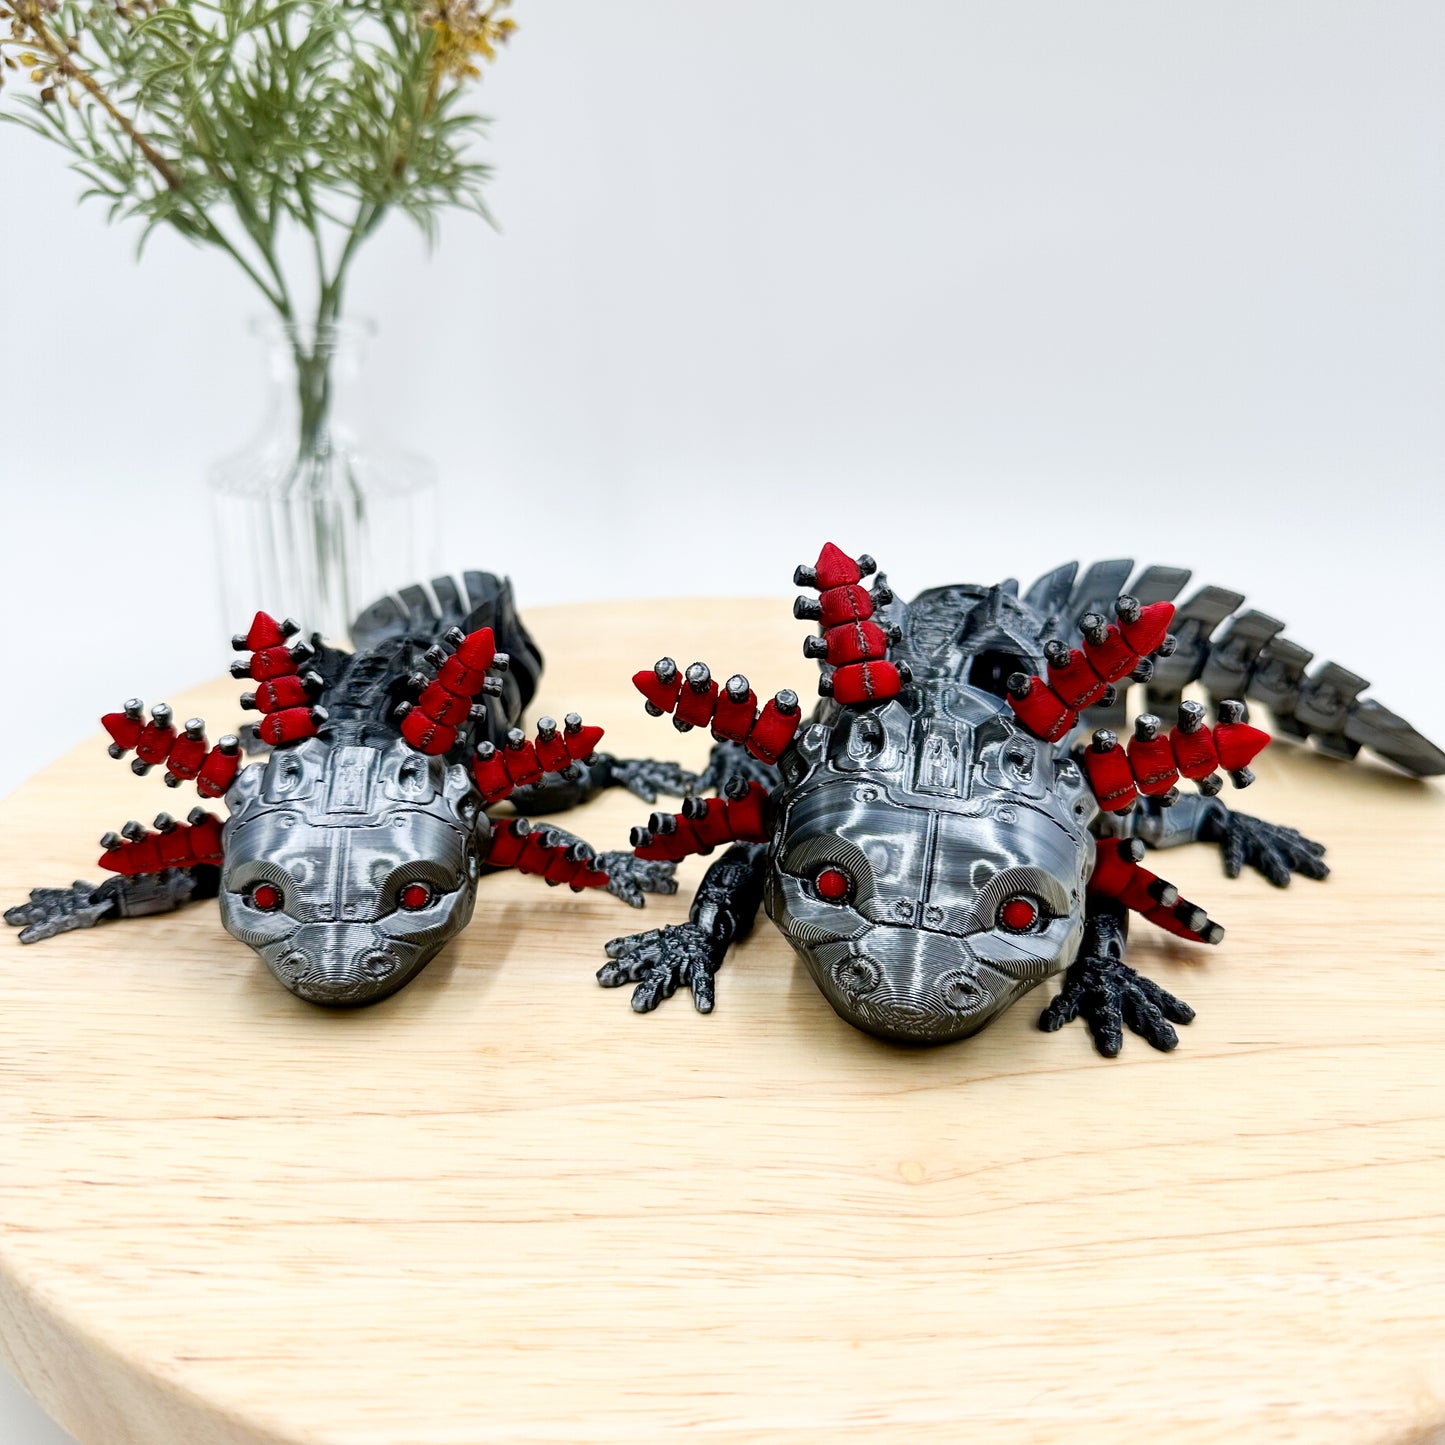 3D Printed Flexi Axolotl Articulating Amphibian Figurine